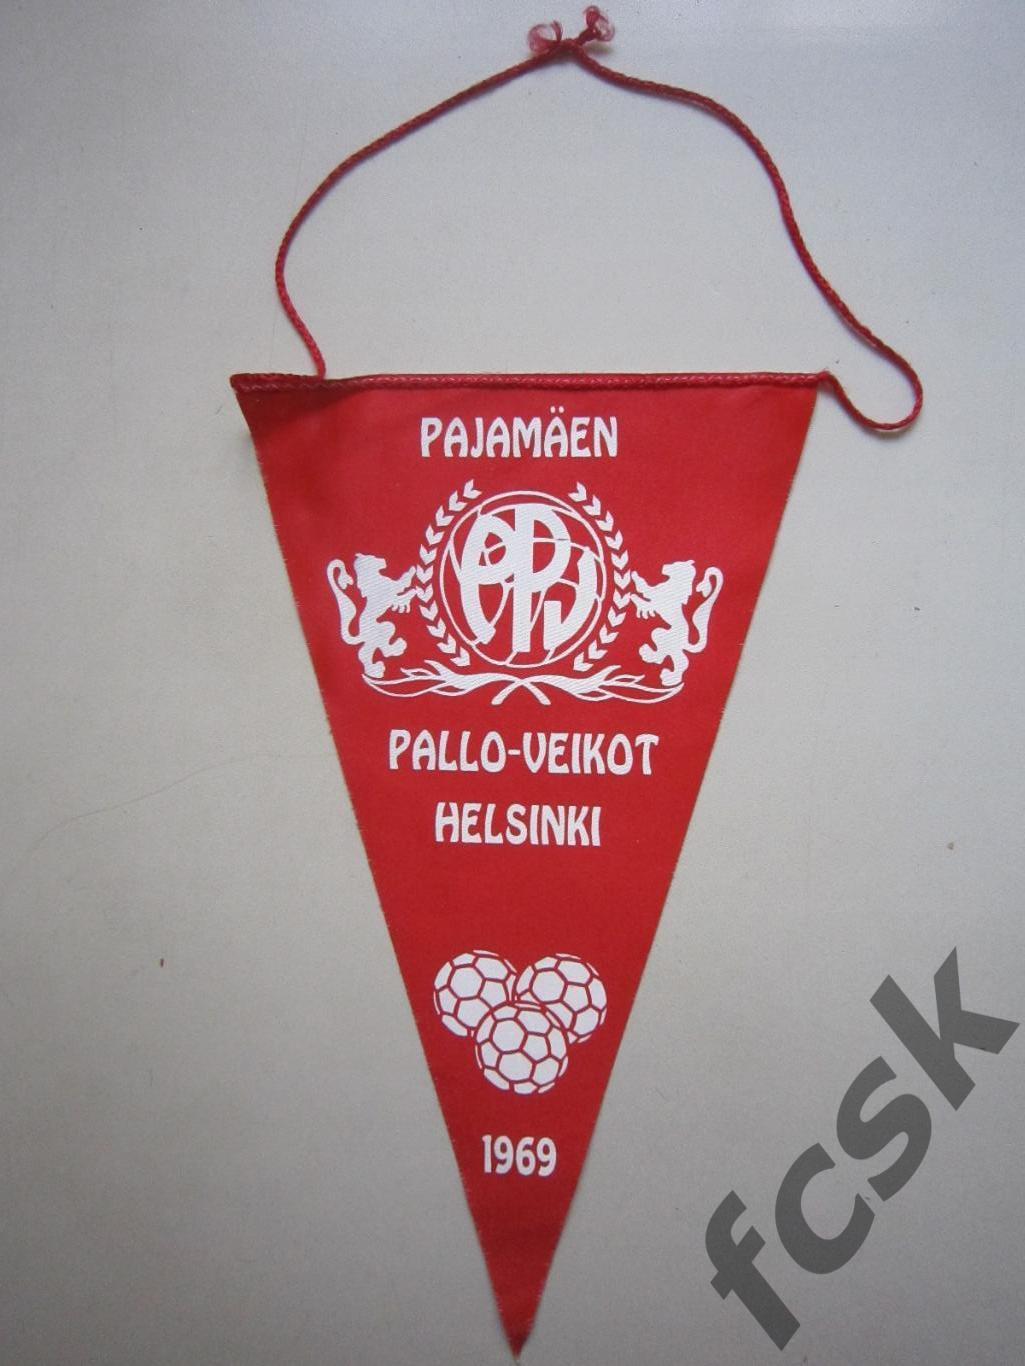 ФК Паямяен Палло-Вейкот Финляндия Pajamaen Pallo-Veikot Finland / Suomi (А)